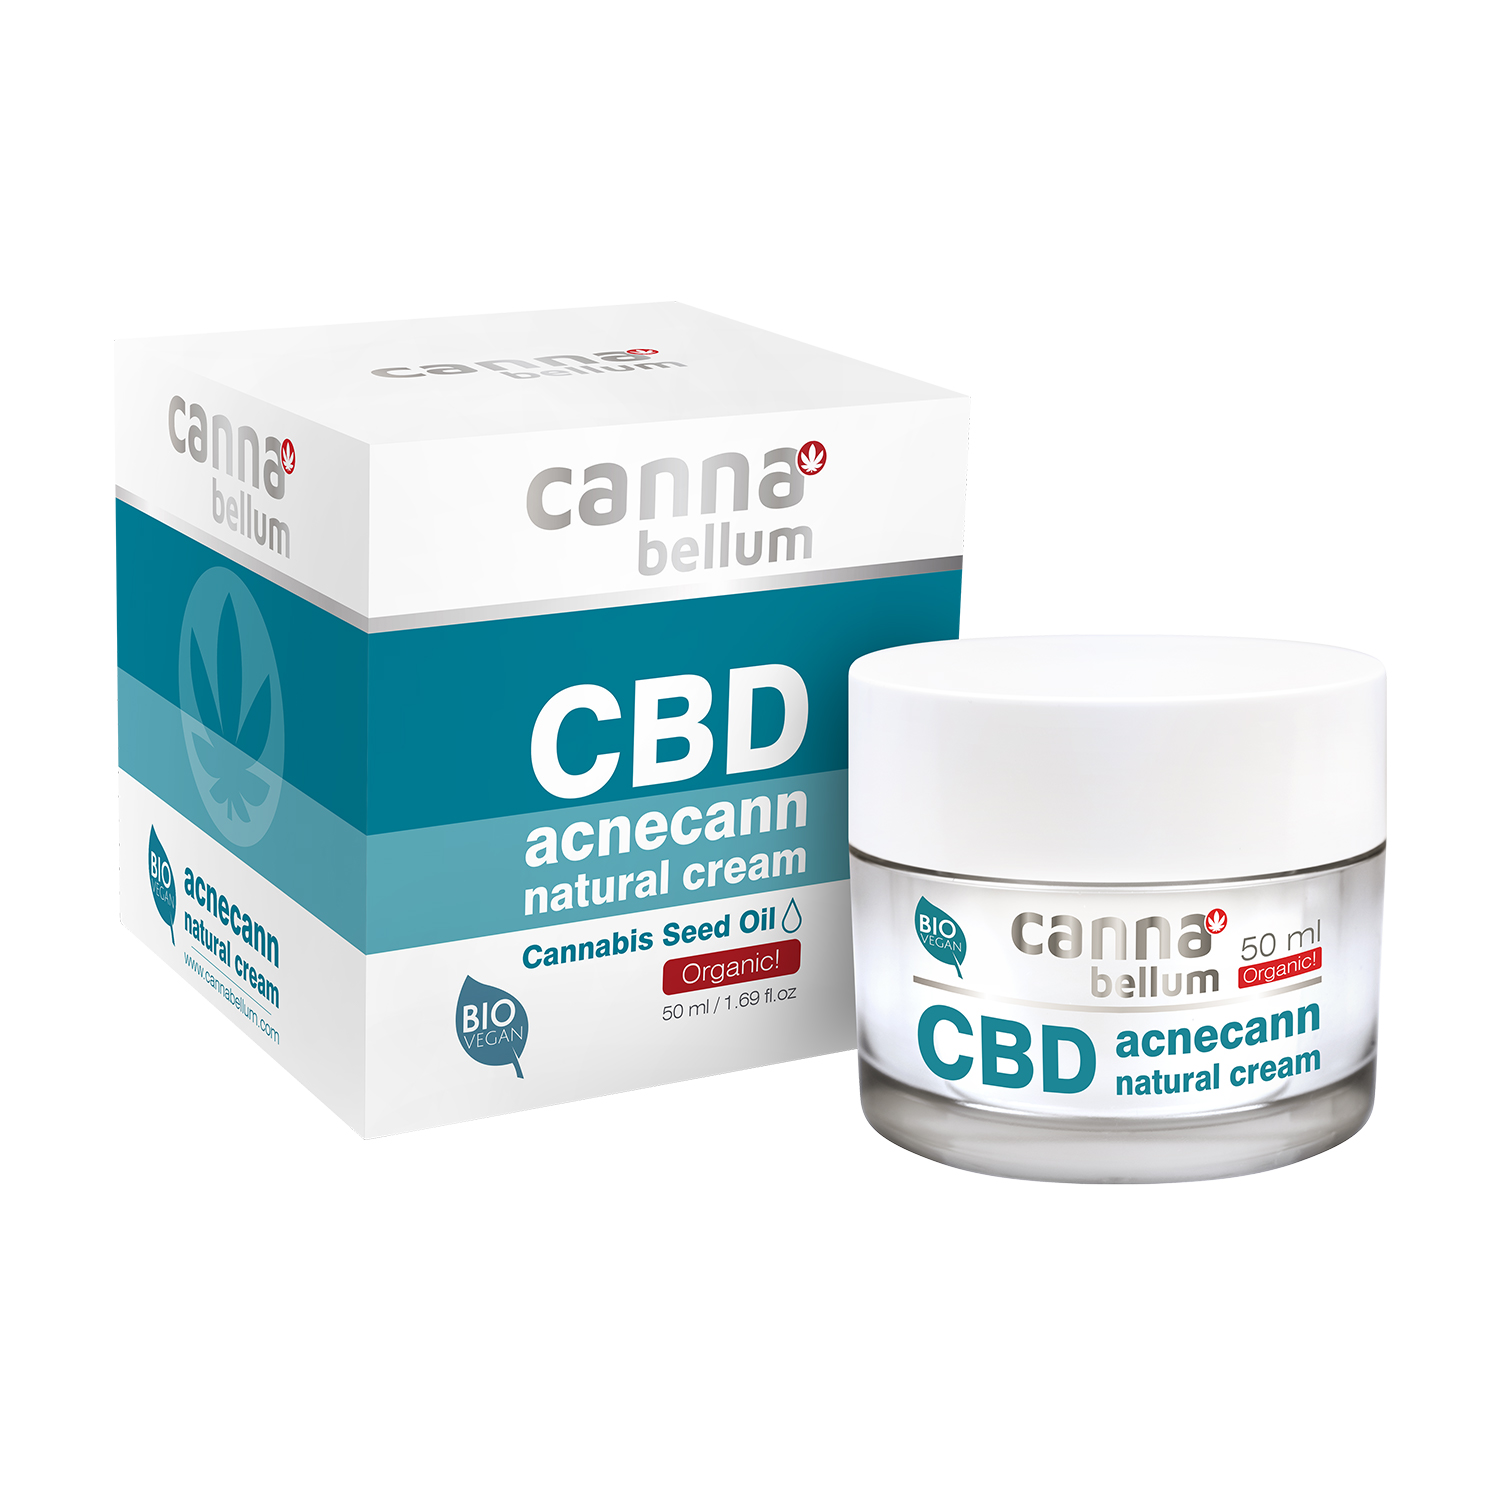 Cannabellum CBD acnecann natural cream 50ml P1244 komplet WEB 102